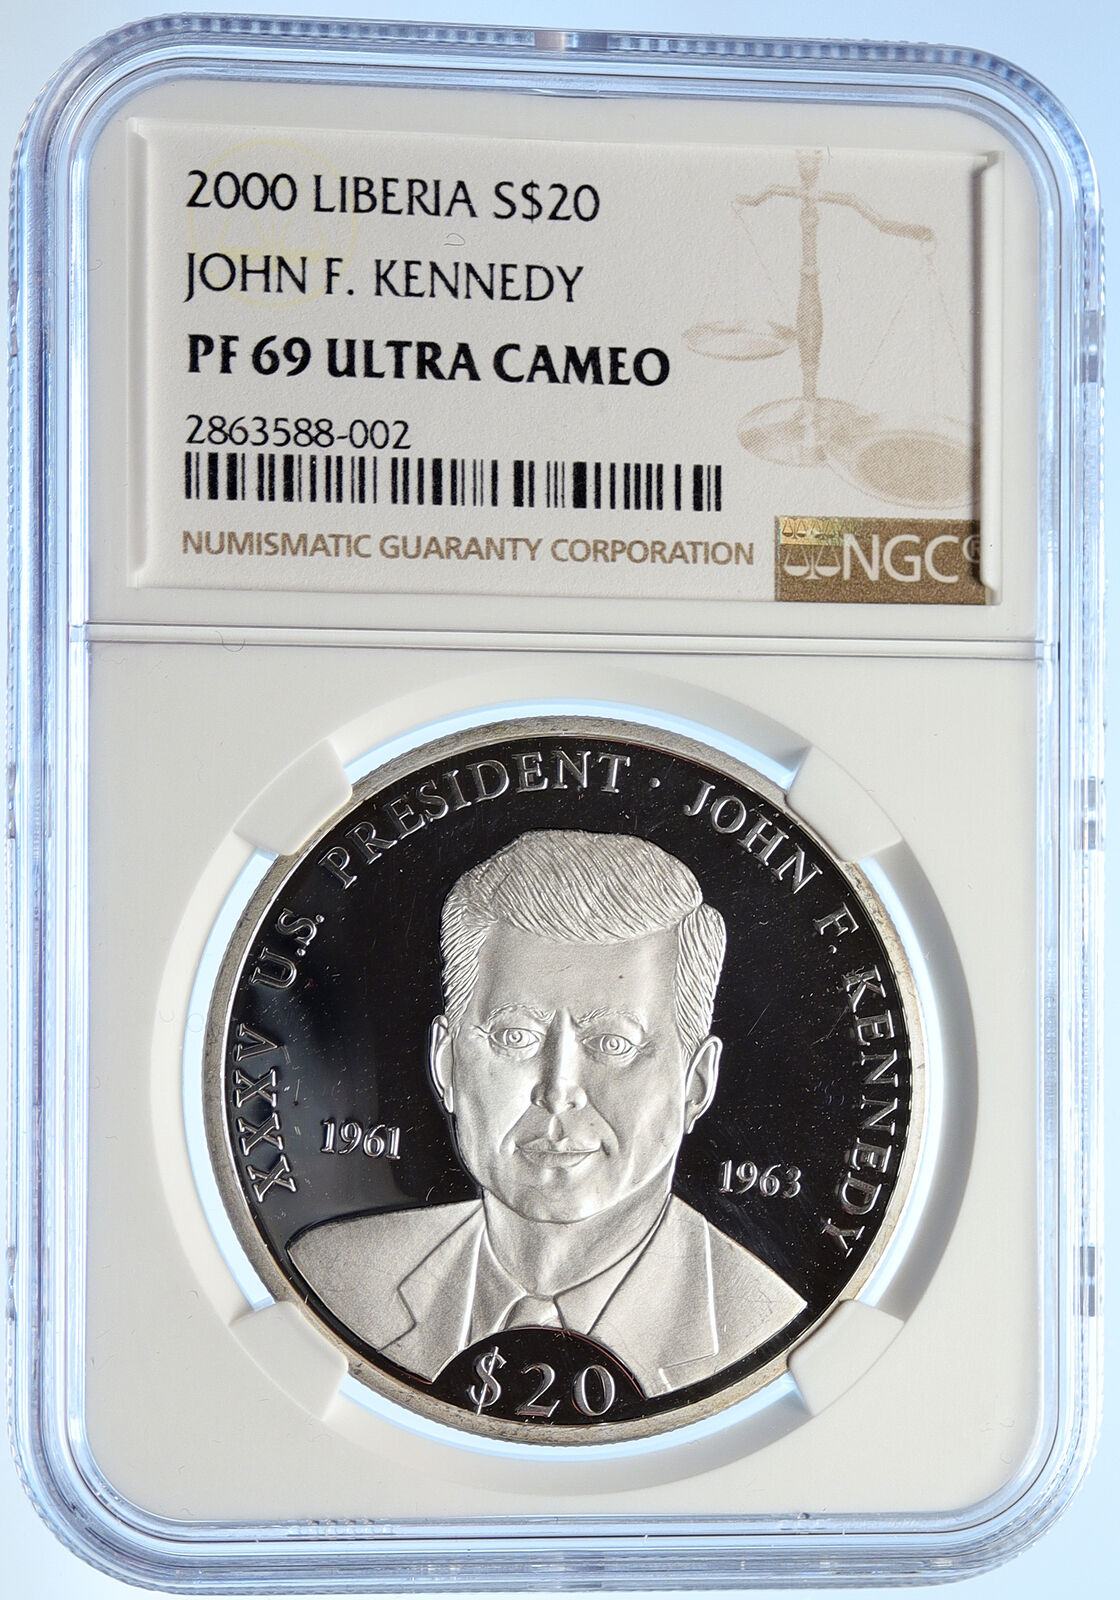 2000 LIBERIA US President JOHN F KENNEDY Proof Silver 20 Dollar Coin NGC i106795